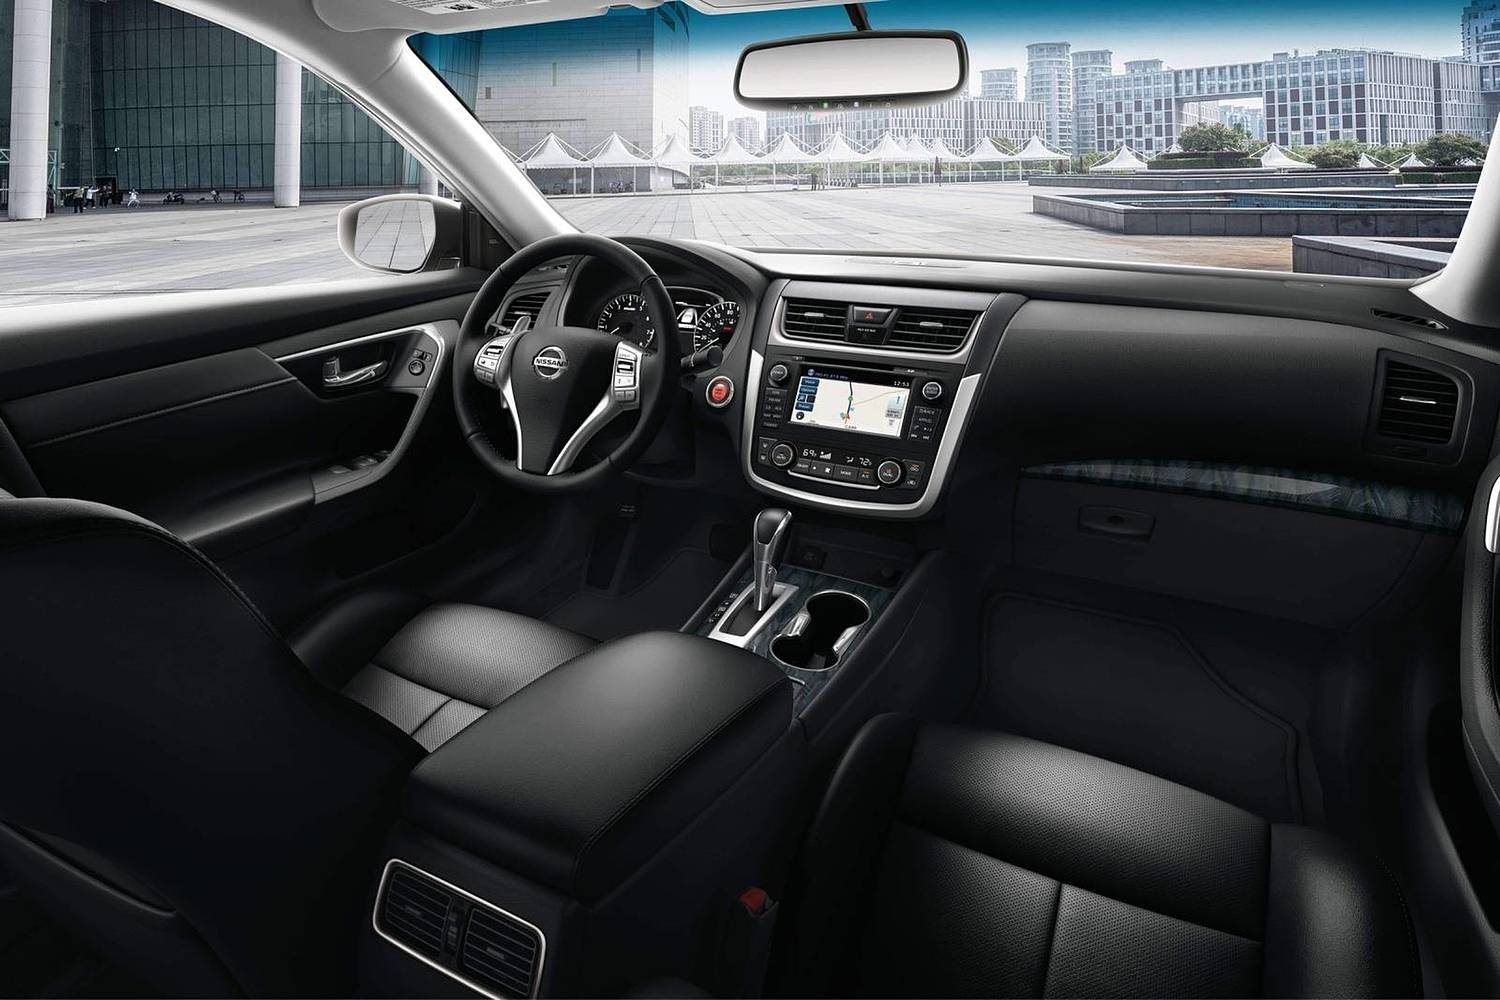 Nissan Altima 3.5 SL Sedan Dashboard (2017 model year shown)